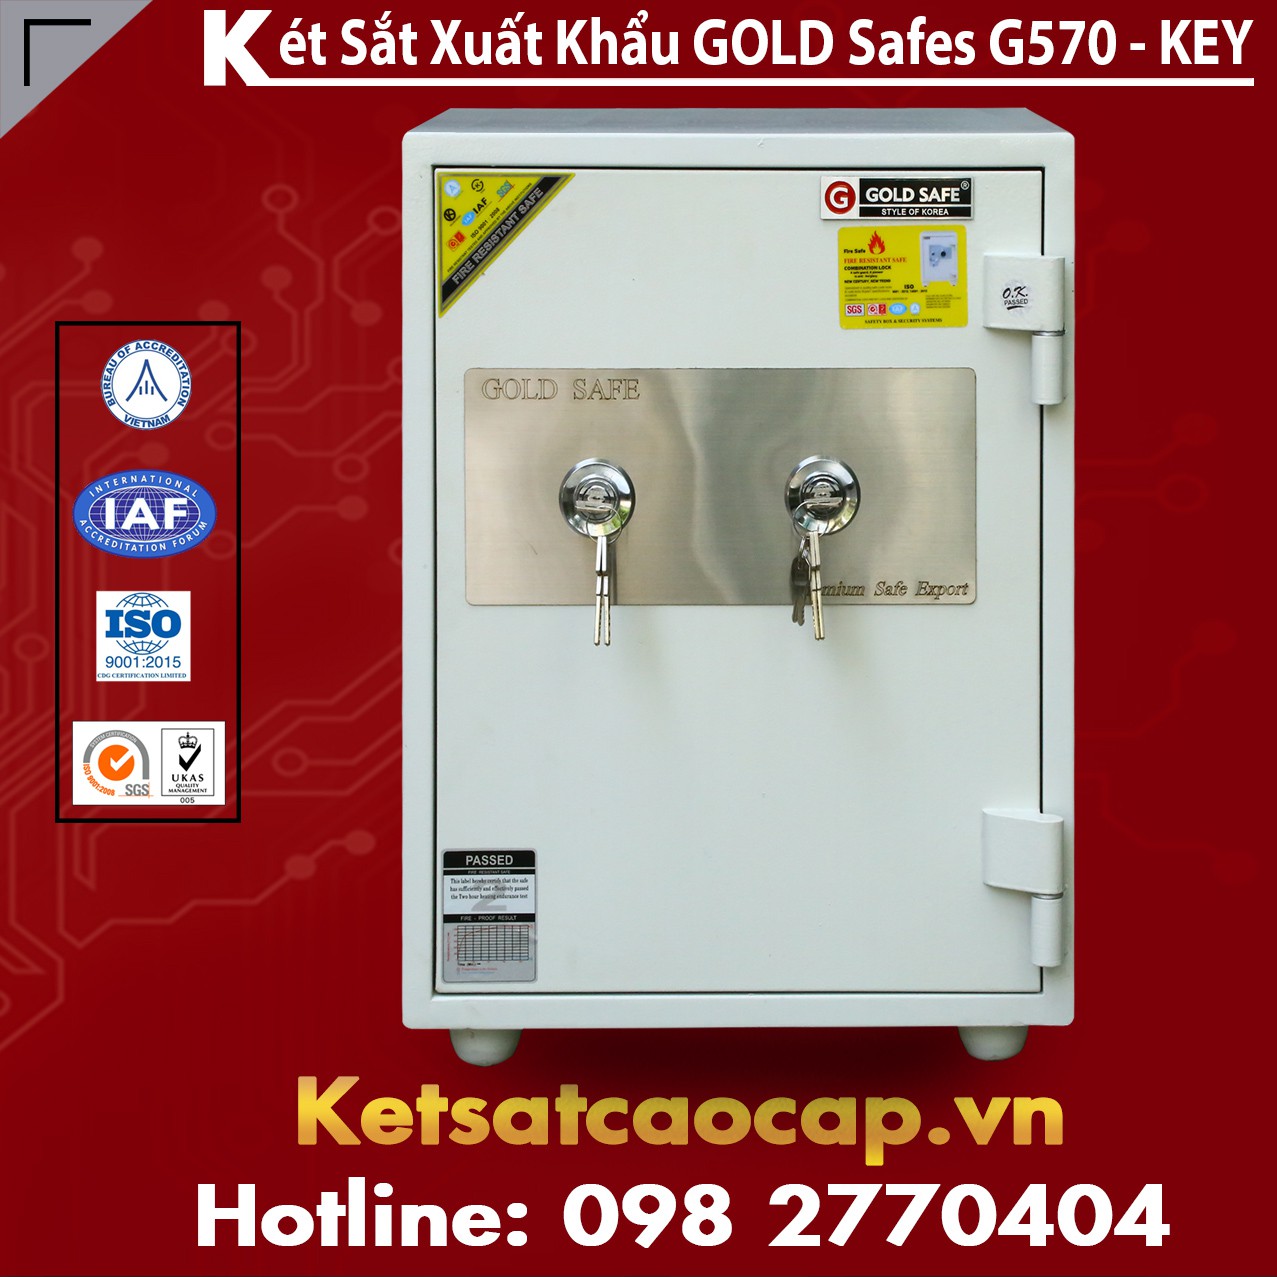 Két Sắt Đại Gia GOLD SAFES G570 KEY